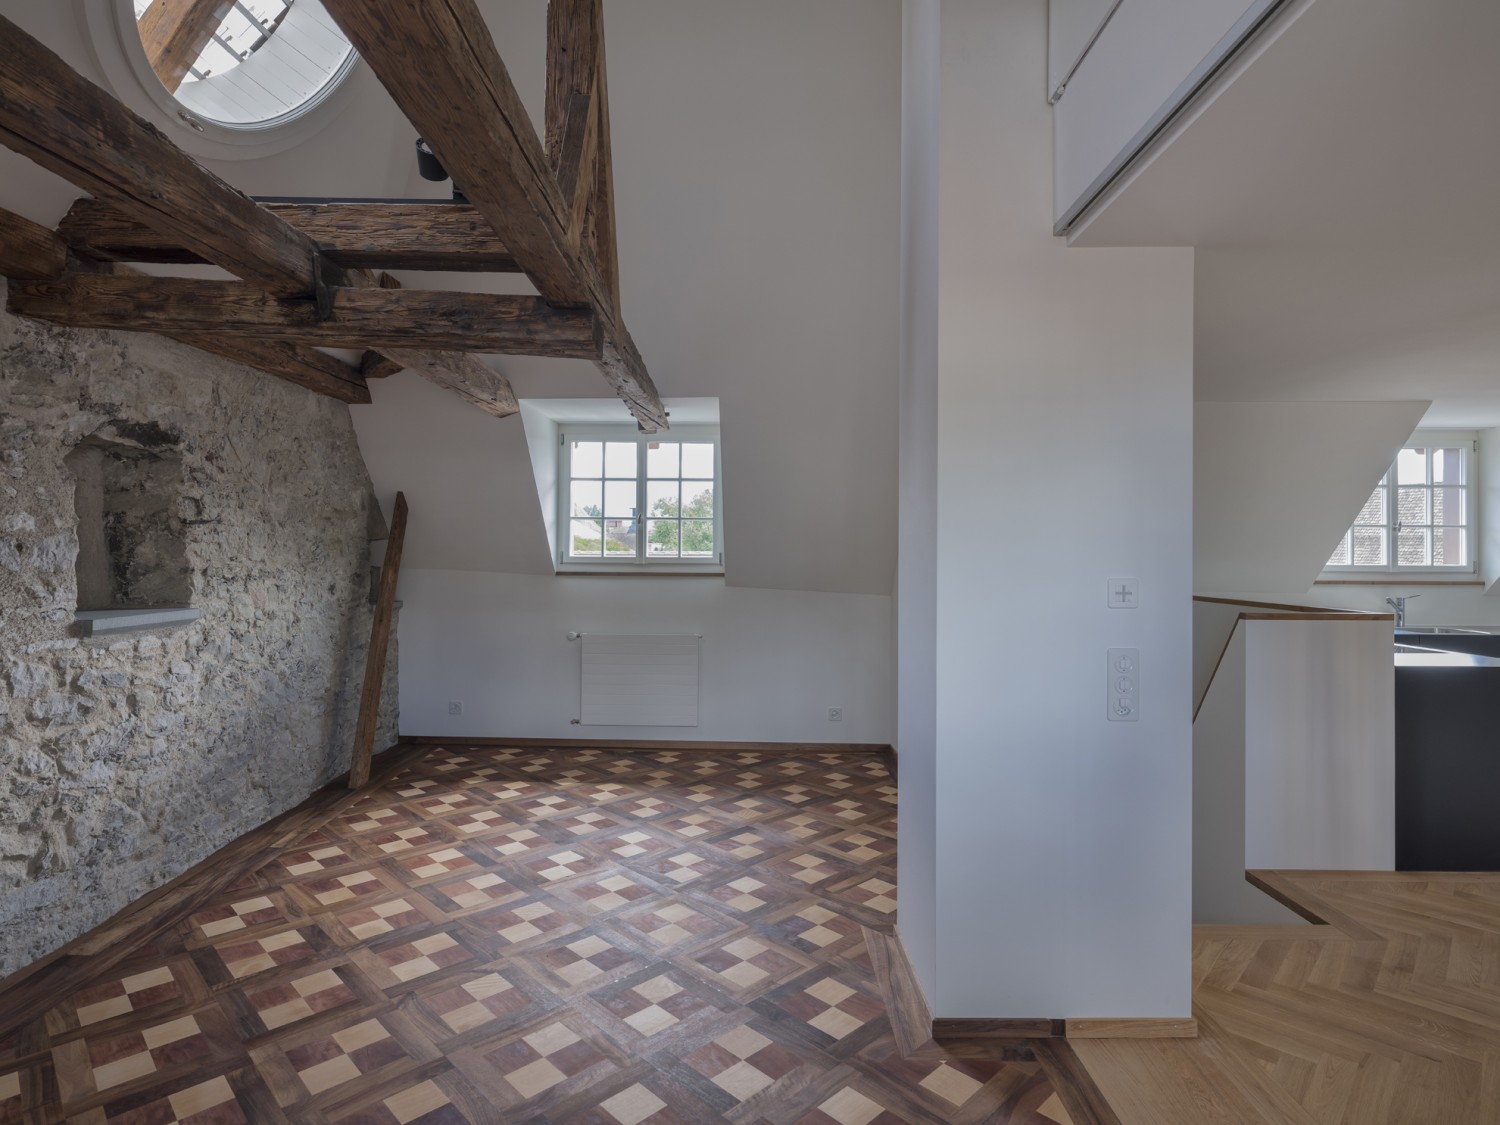 HUMMBURKART ARCHITEKTEN: Renovation Liebenauhaus Luzern